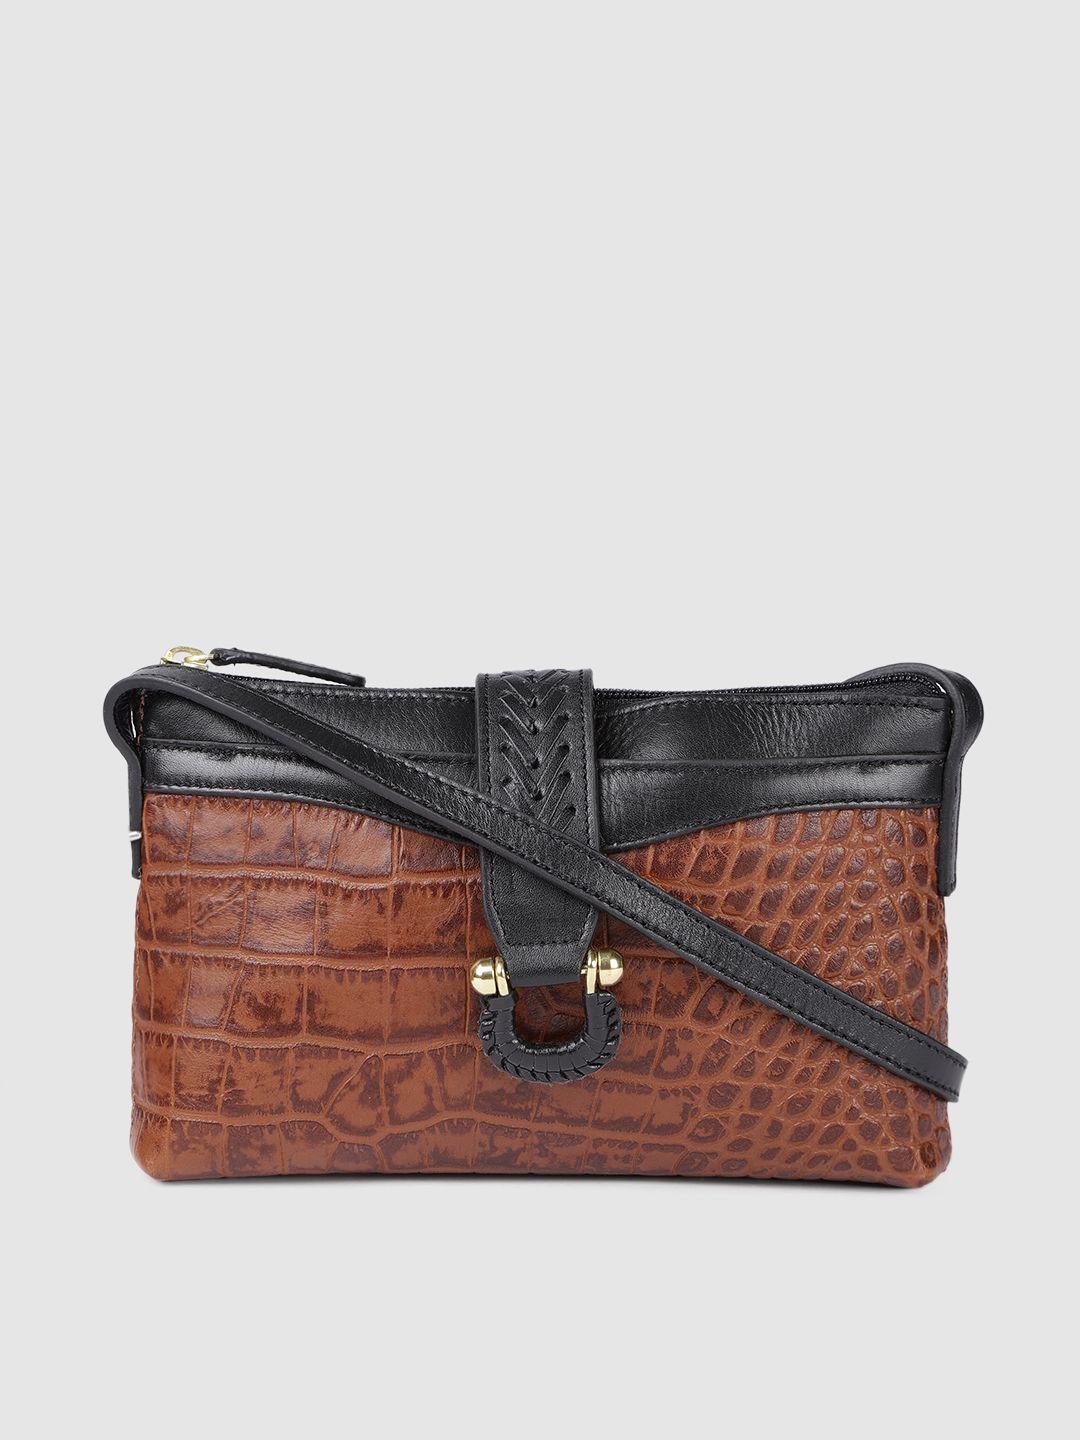 hidesign tan brown textured leather sling bag